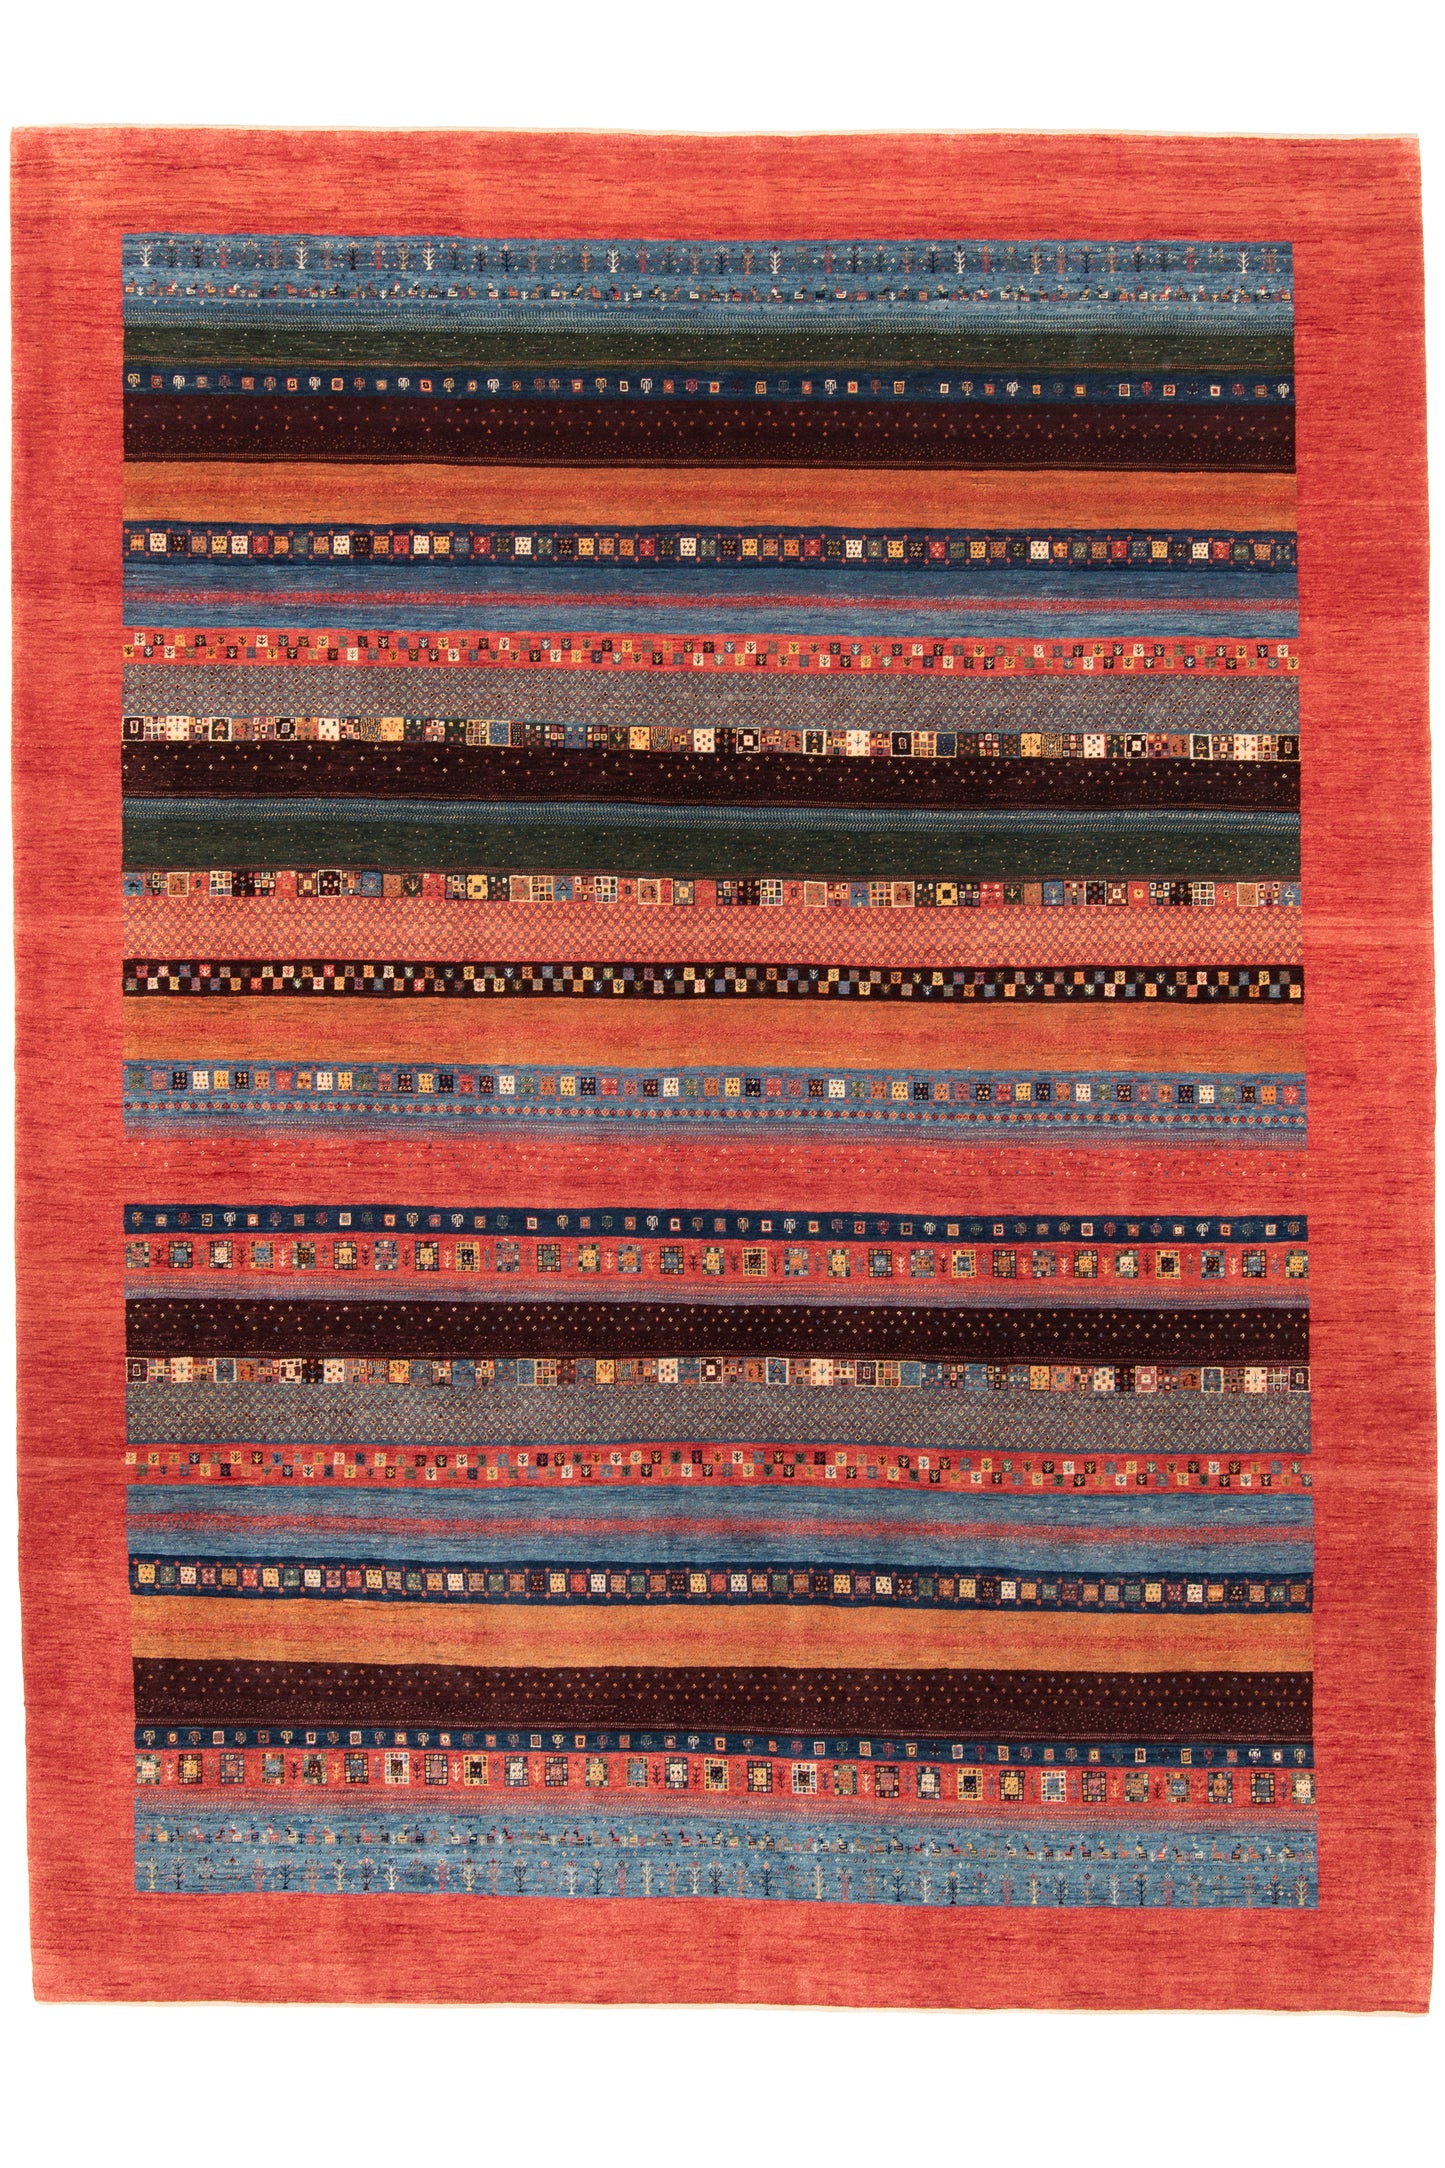 Kaschkuli Mirzai, 340 × 257 cm